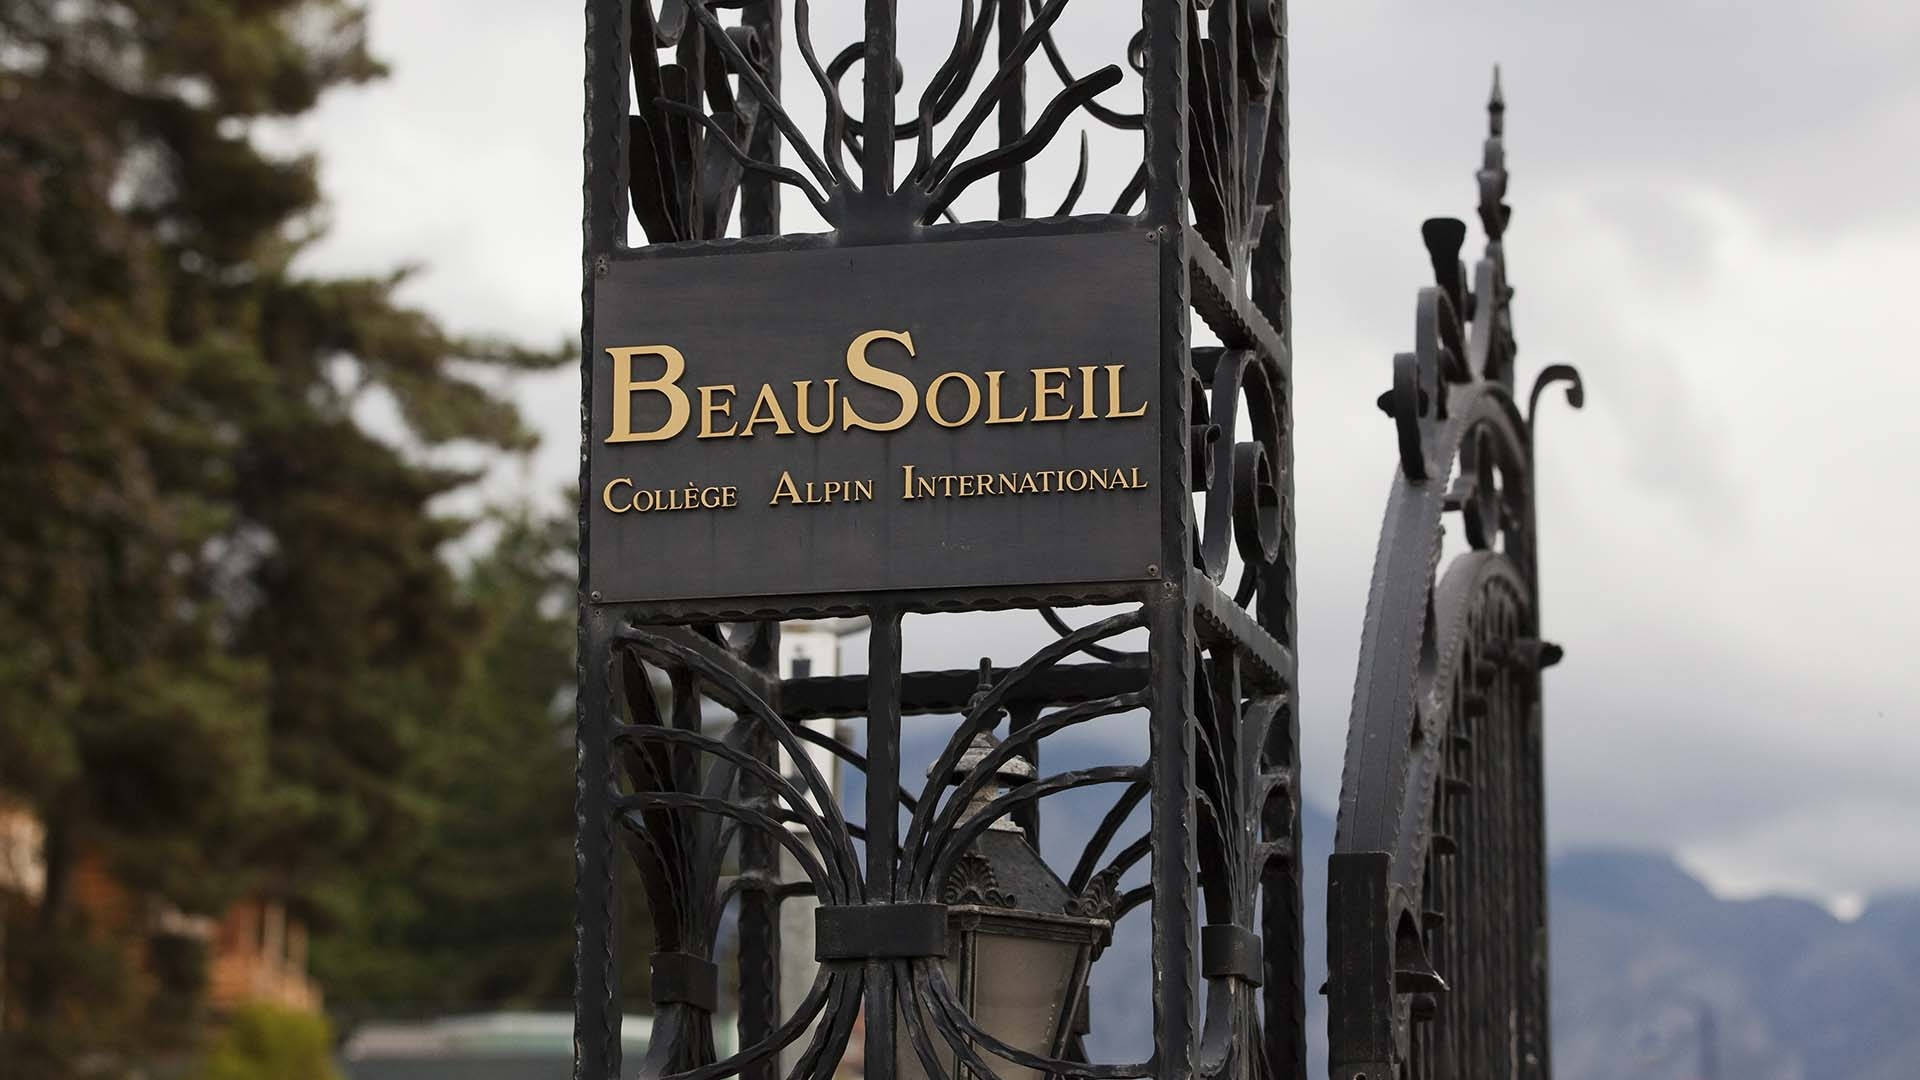 Internationales Alpines College Beau Soleil - slide